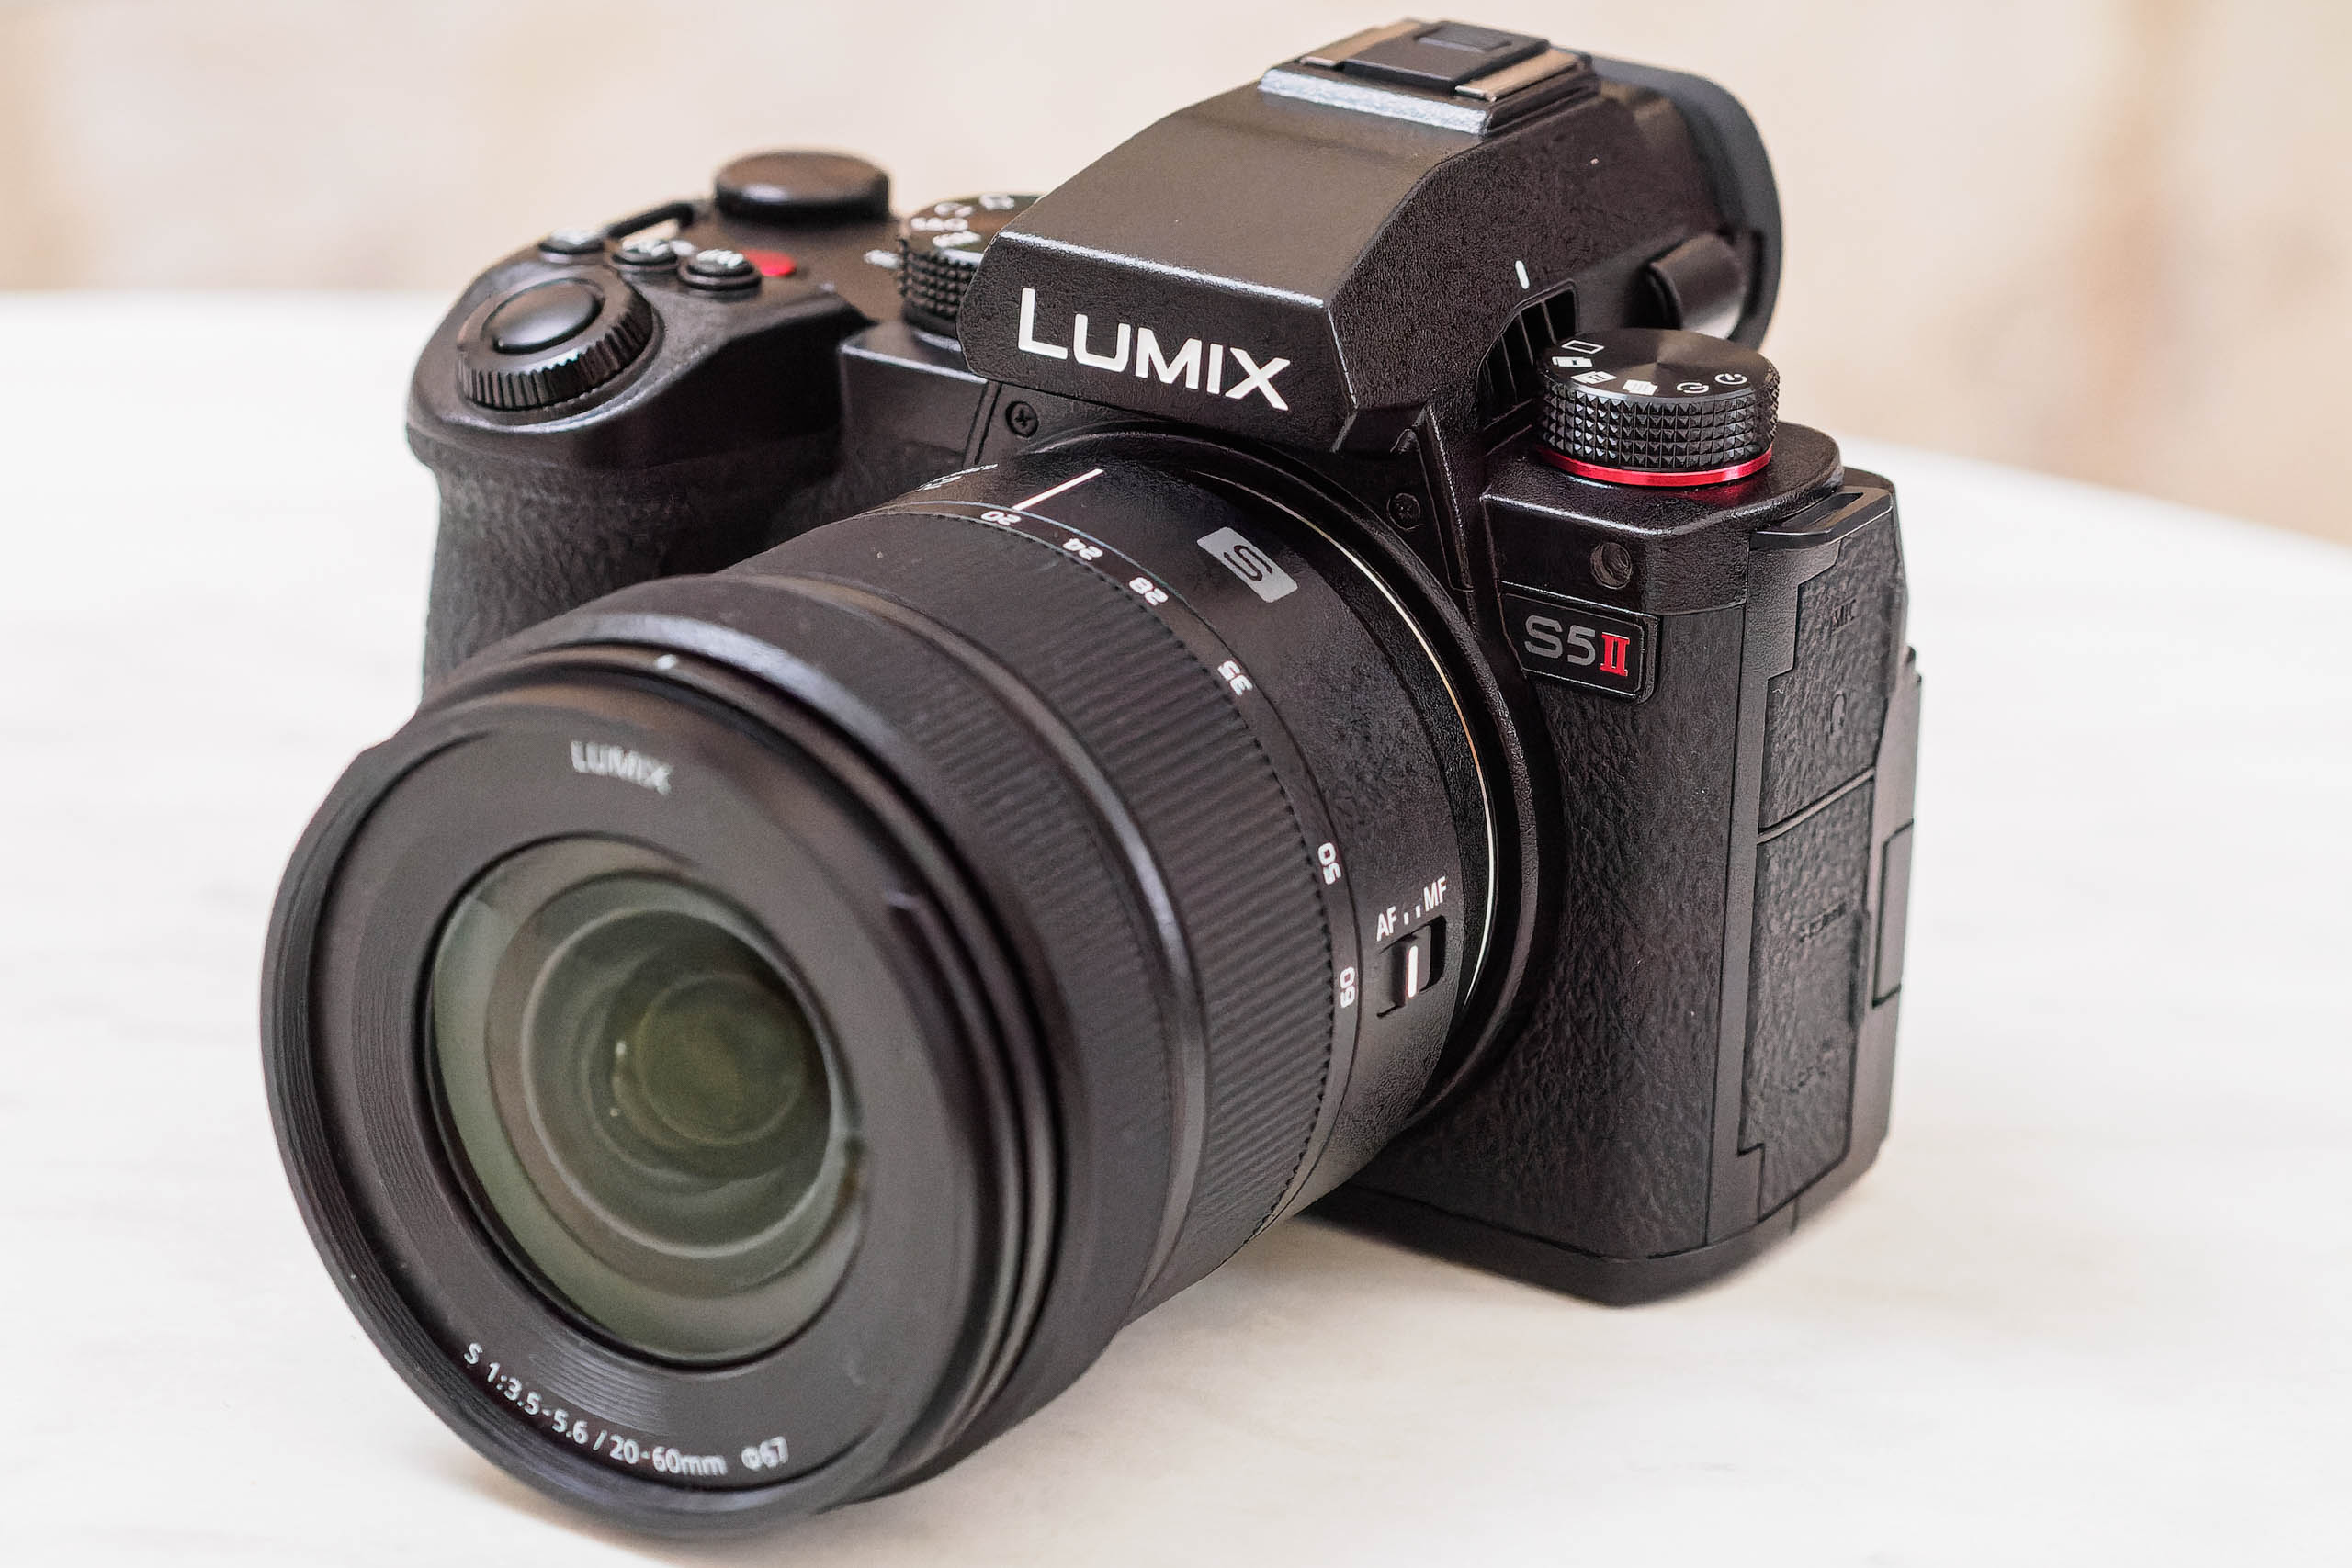 Panasonic Lumix S5II